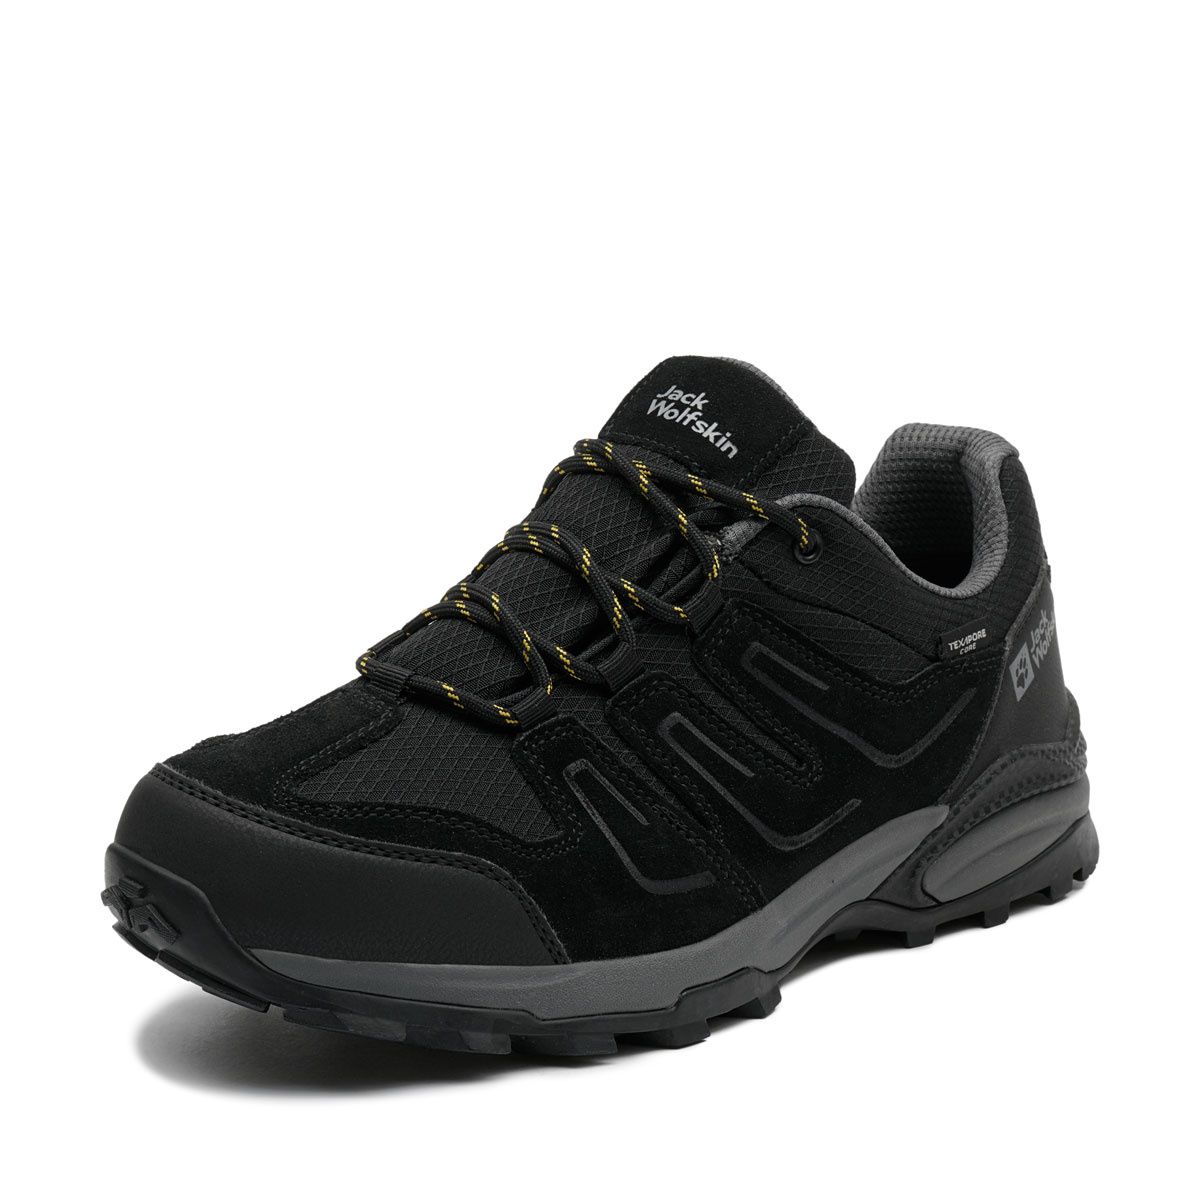 Jack Wolfskin Traction 3 Texapore Low Мъжки спортни обувки 4048991-6055